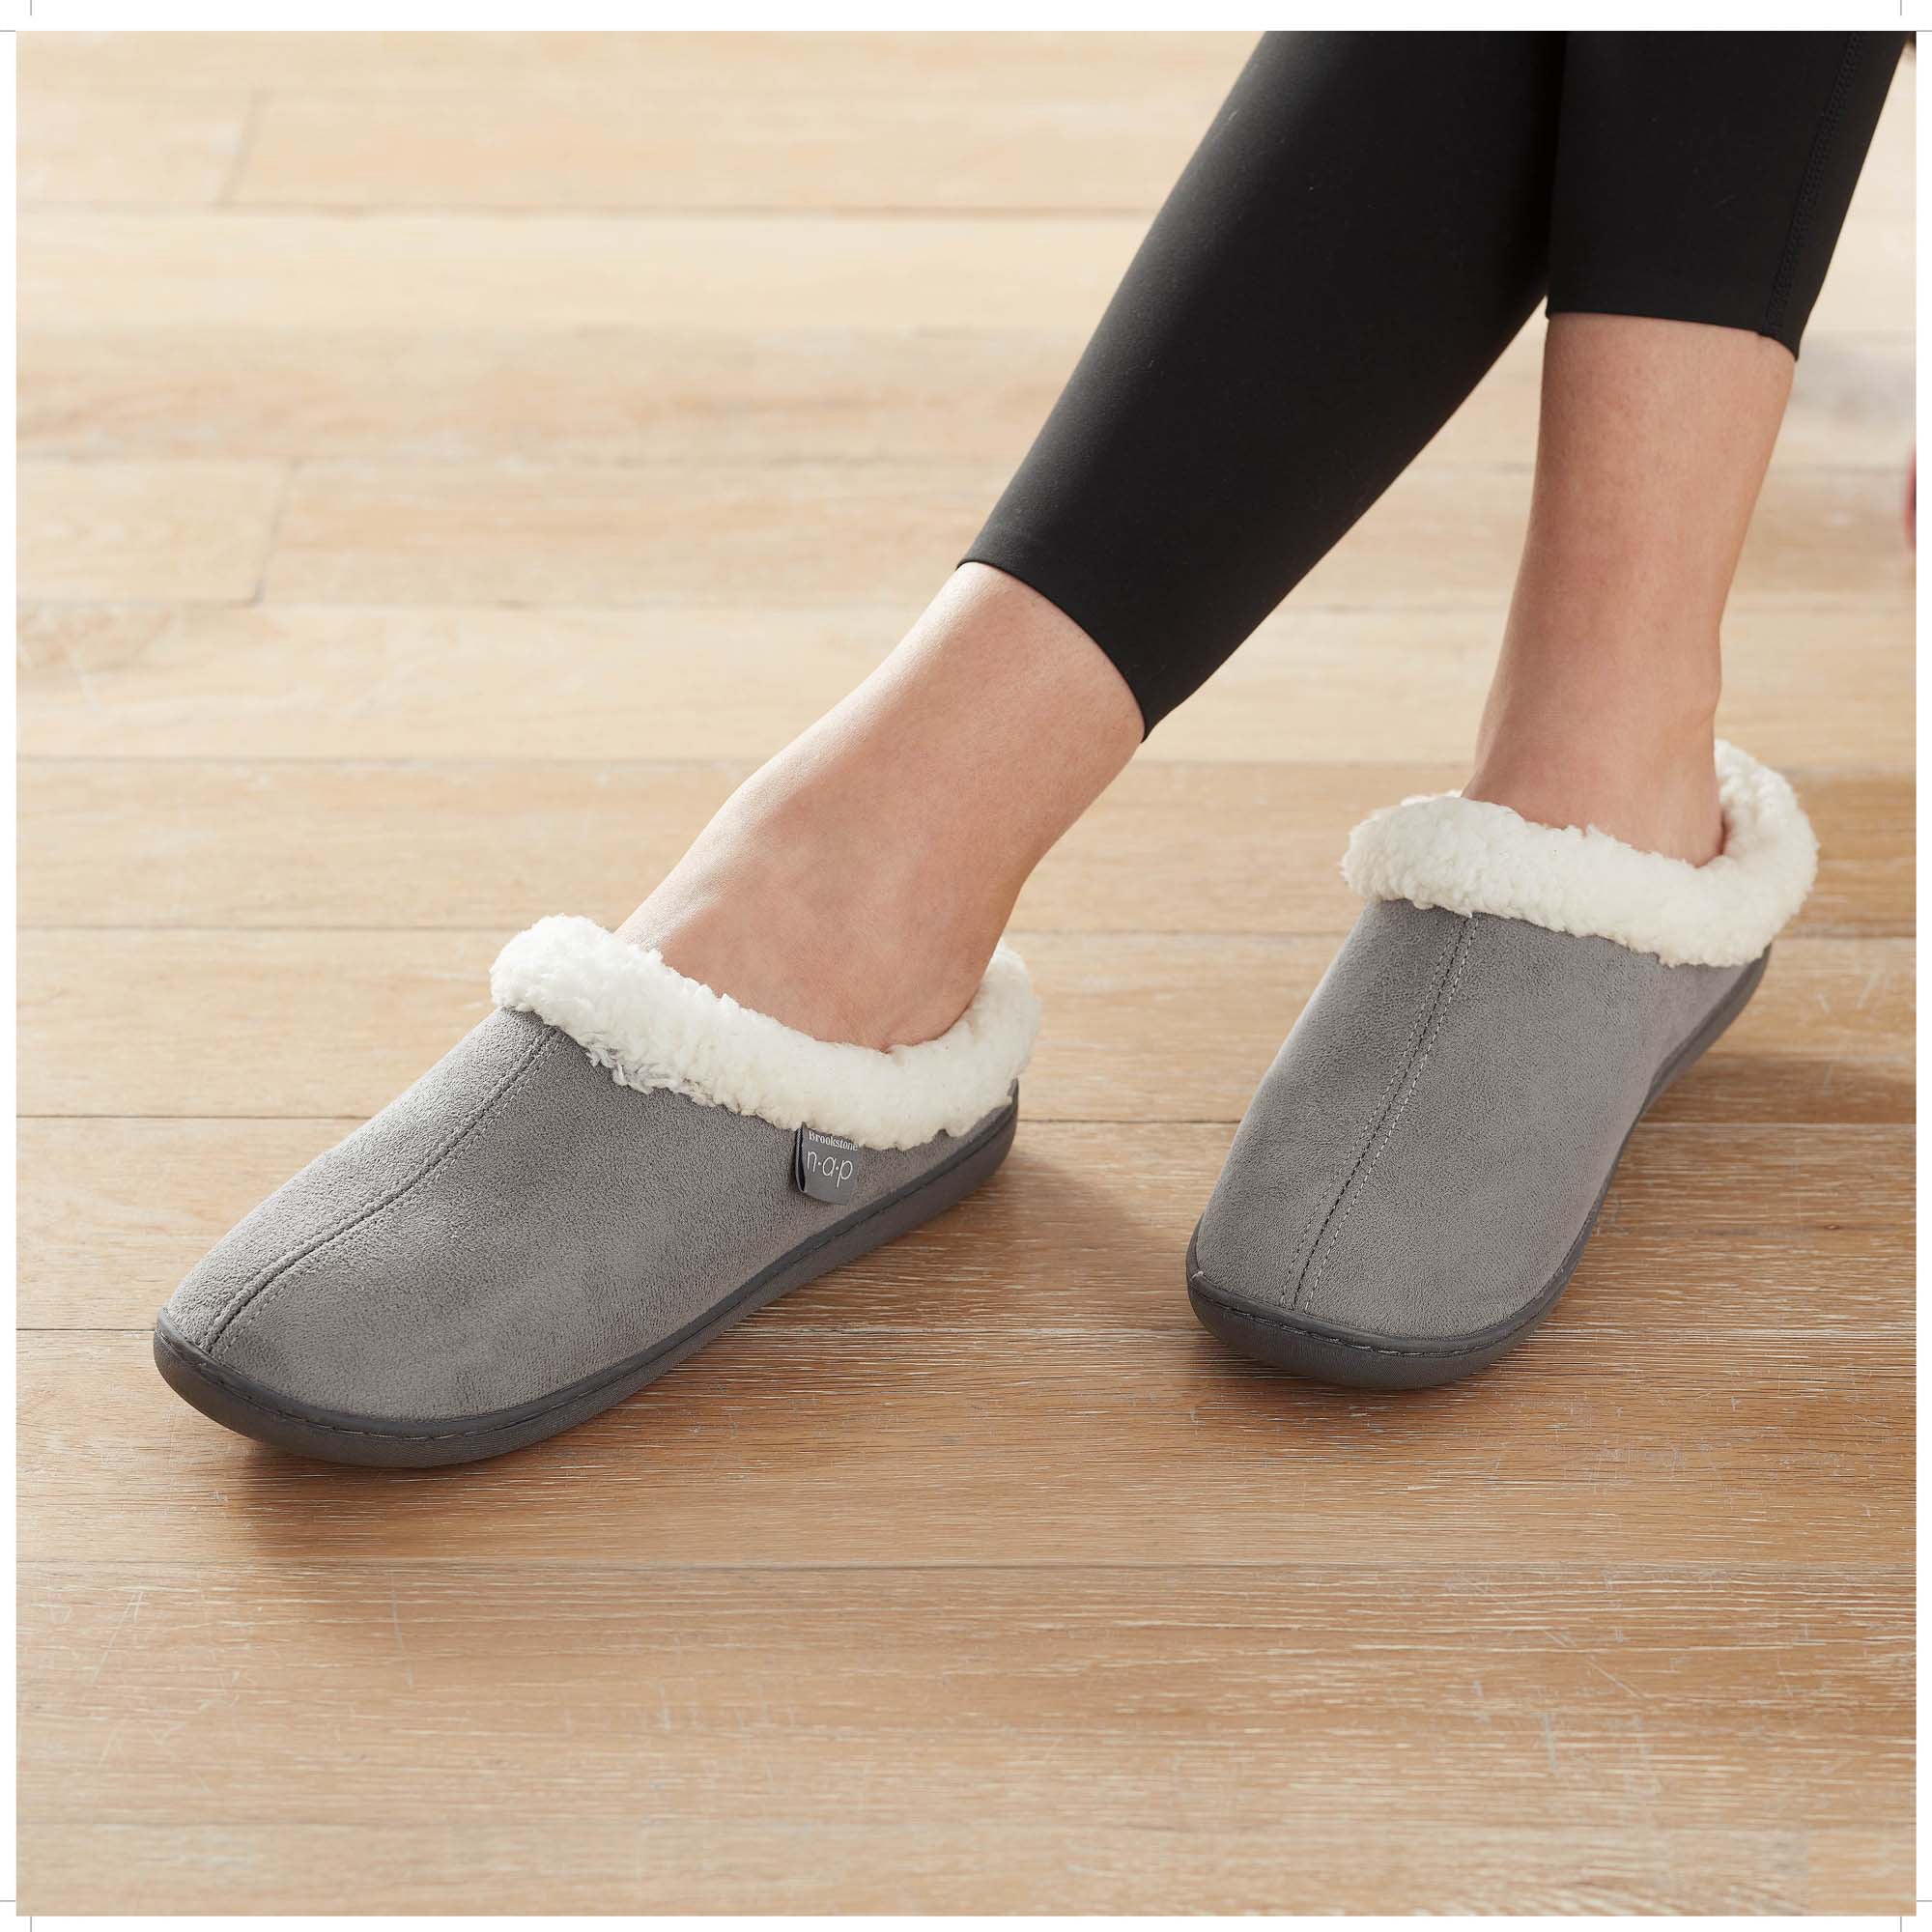 brookstone mens slippers